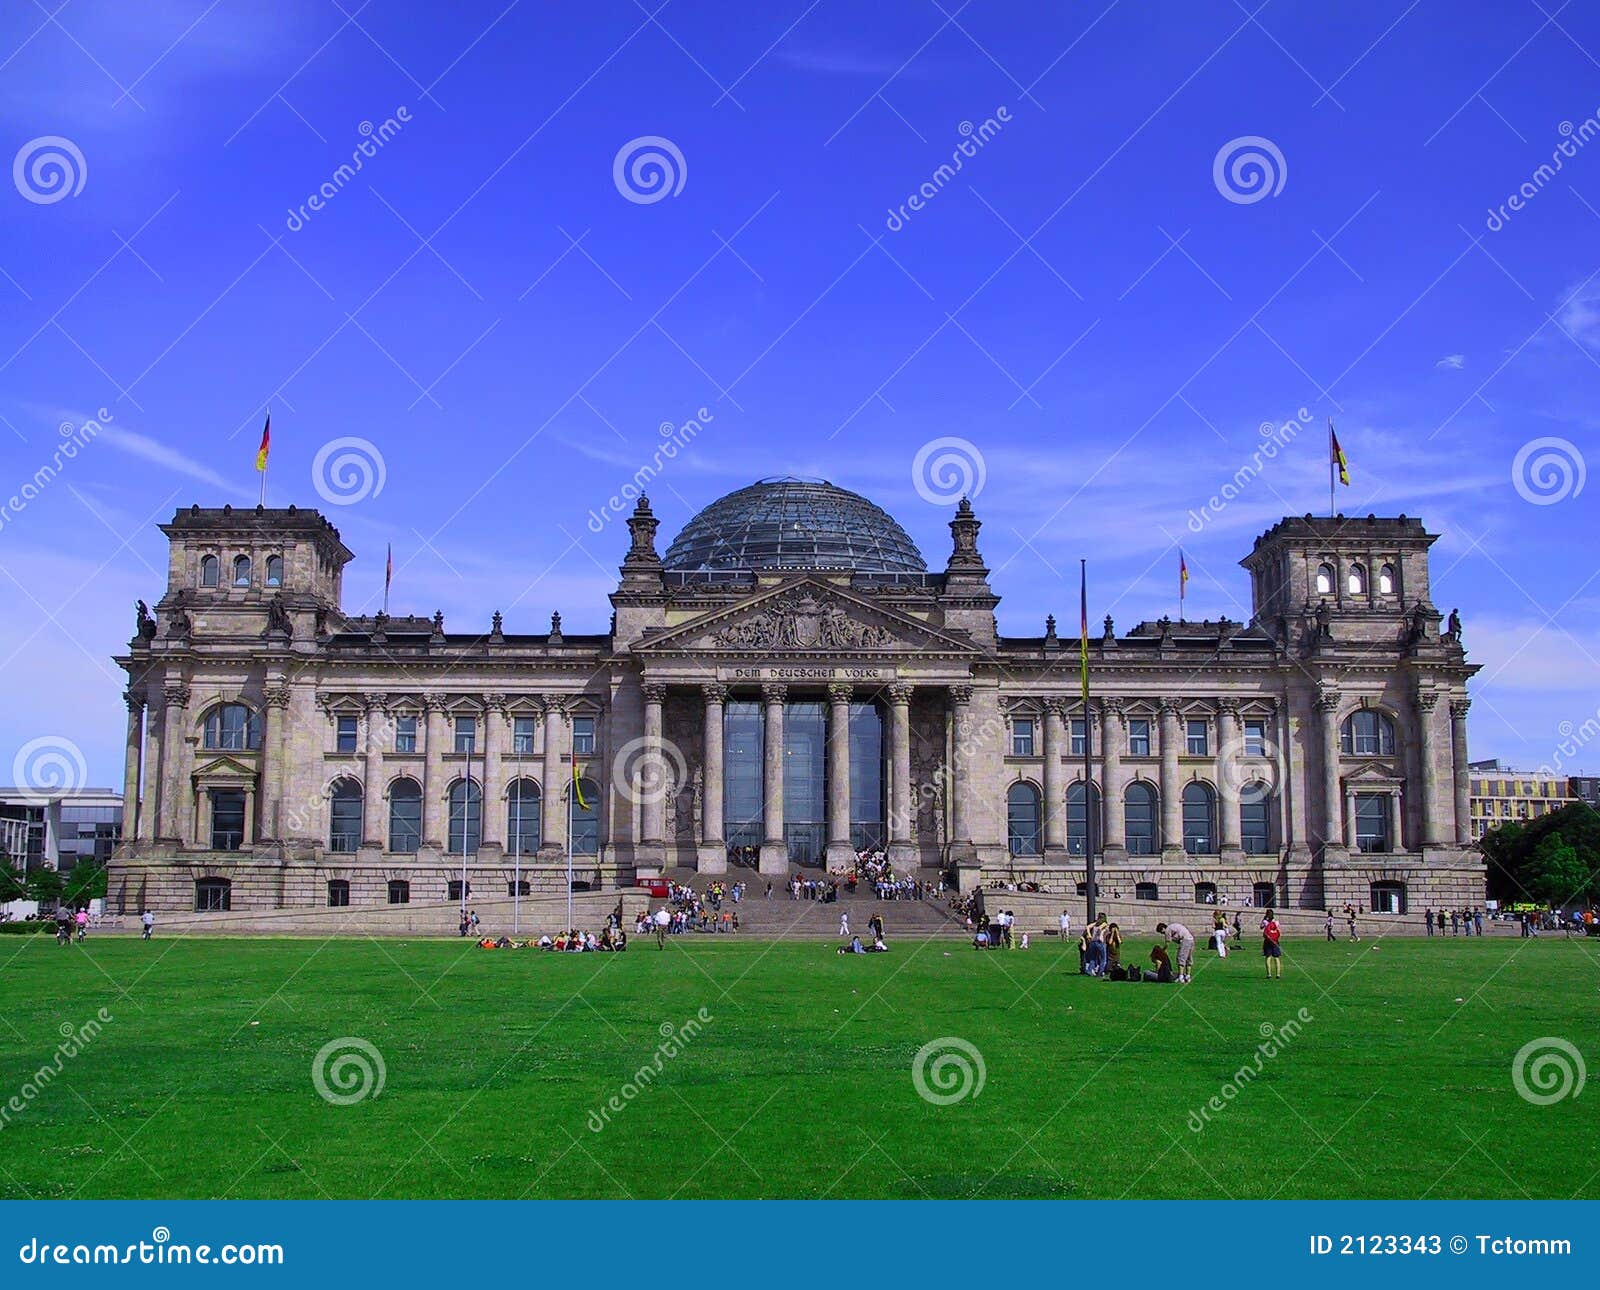 Берлина сканворд. Парламент в Германии 8 букв. Парламент немцев сканворд.